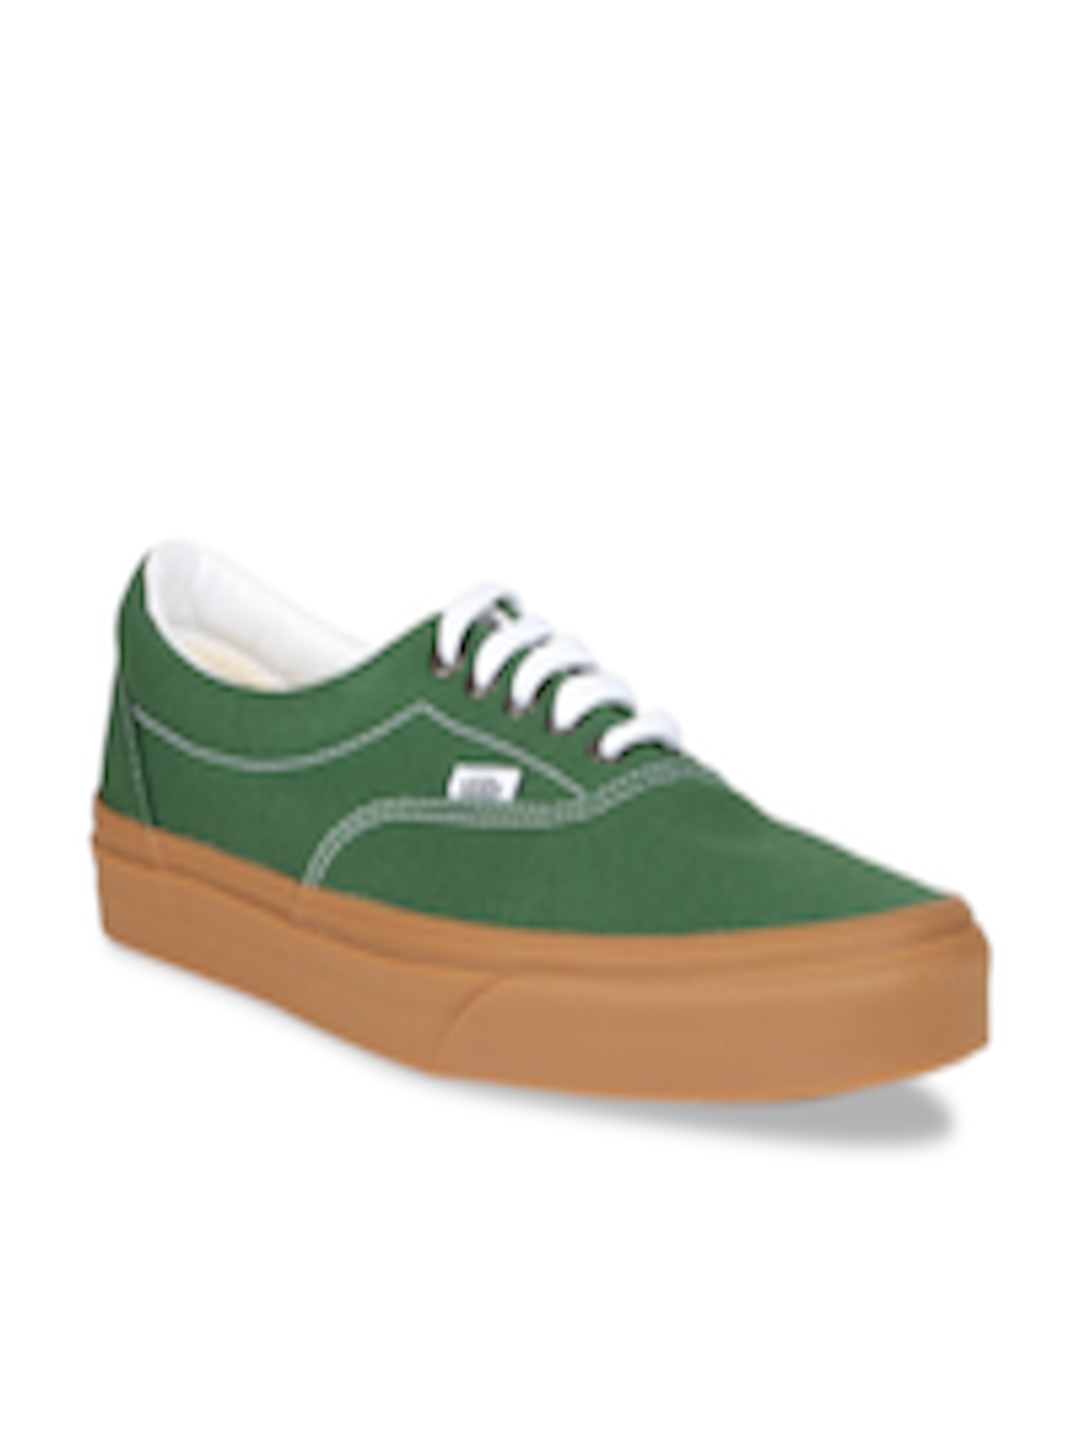 Buy Vans Unisex Green ERA Sneakers - Casual Shoes for Unisex 12295774